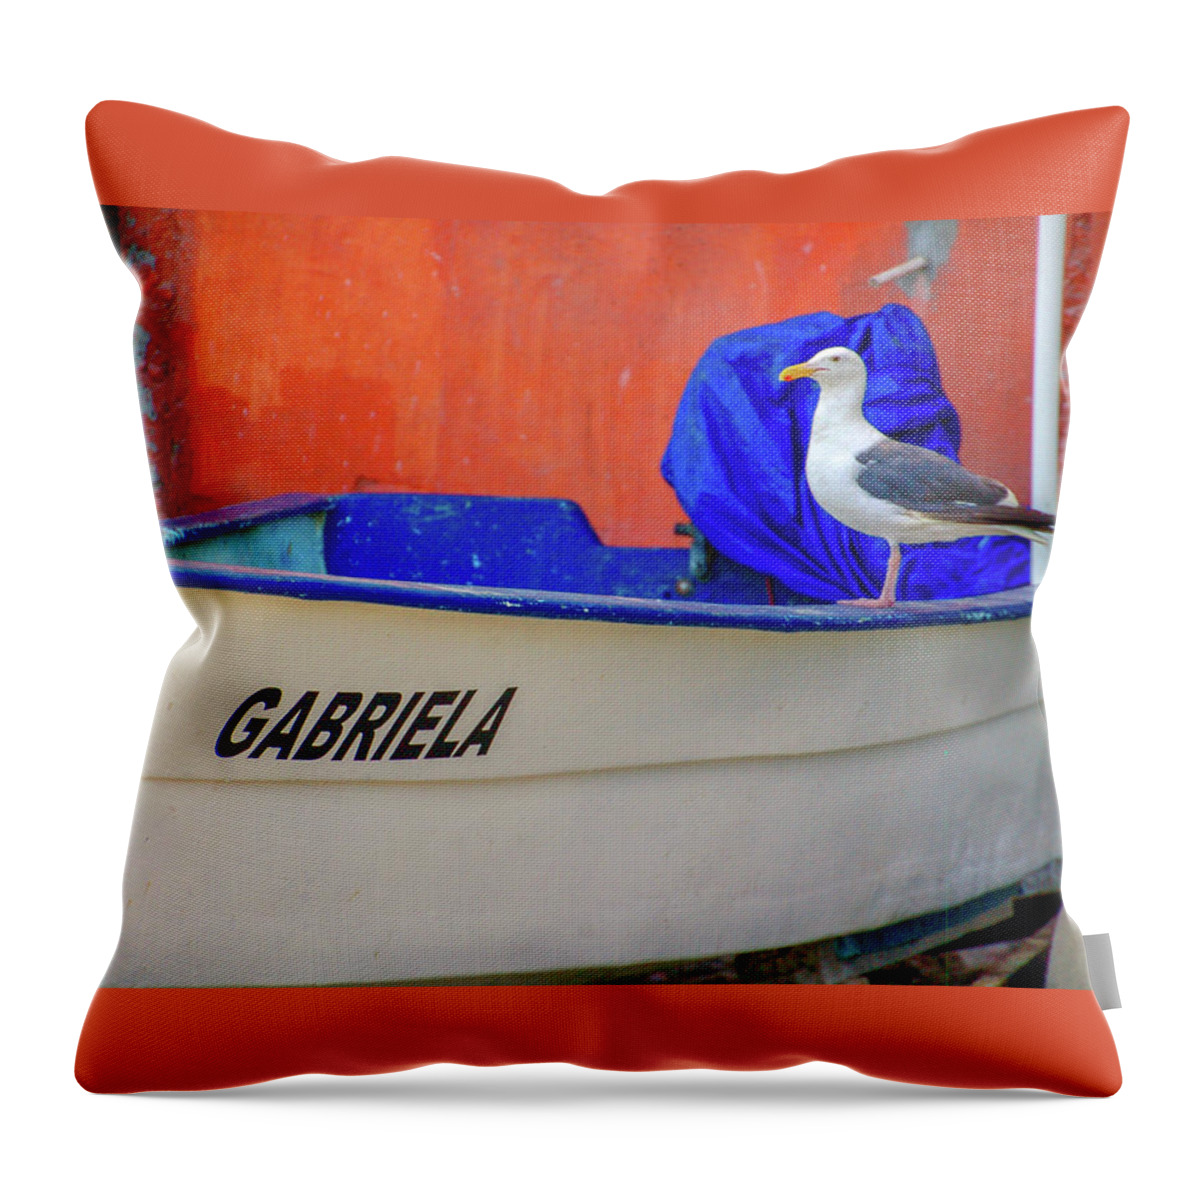 Popotla Throw Pillow featuring the photograph Gabriela by William Scott Koenig